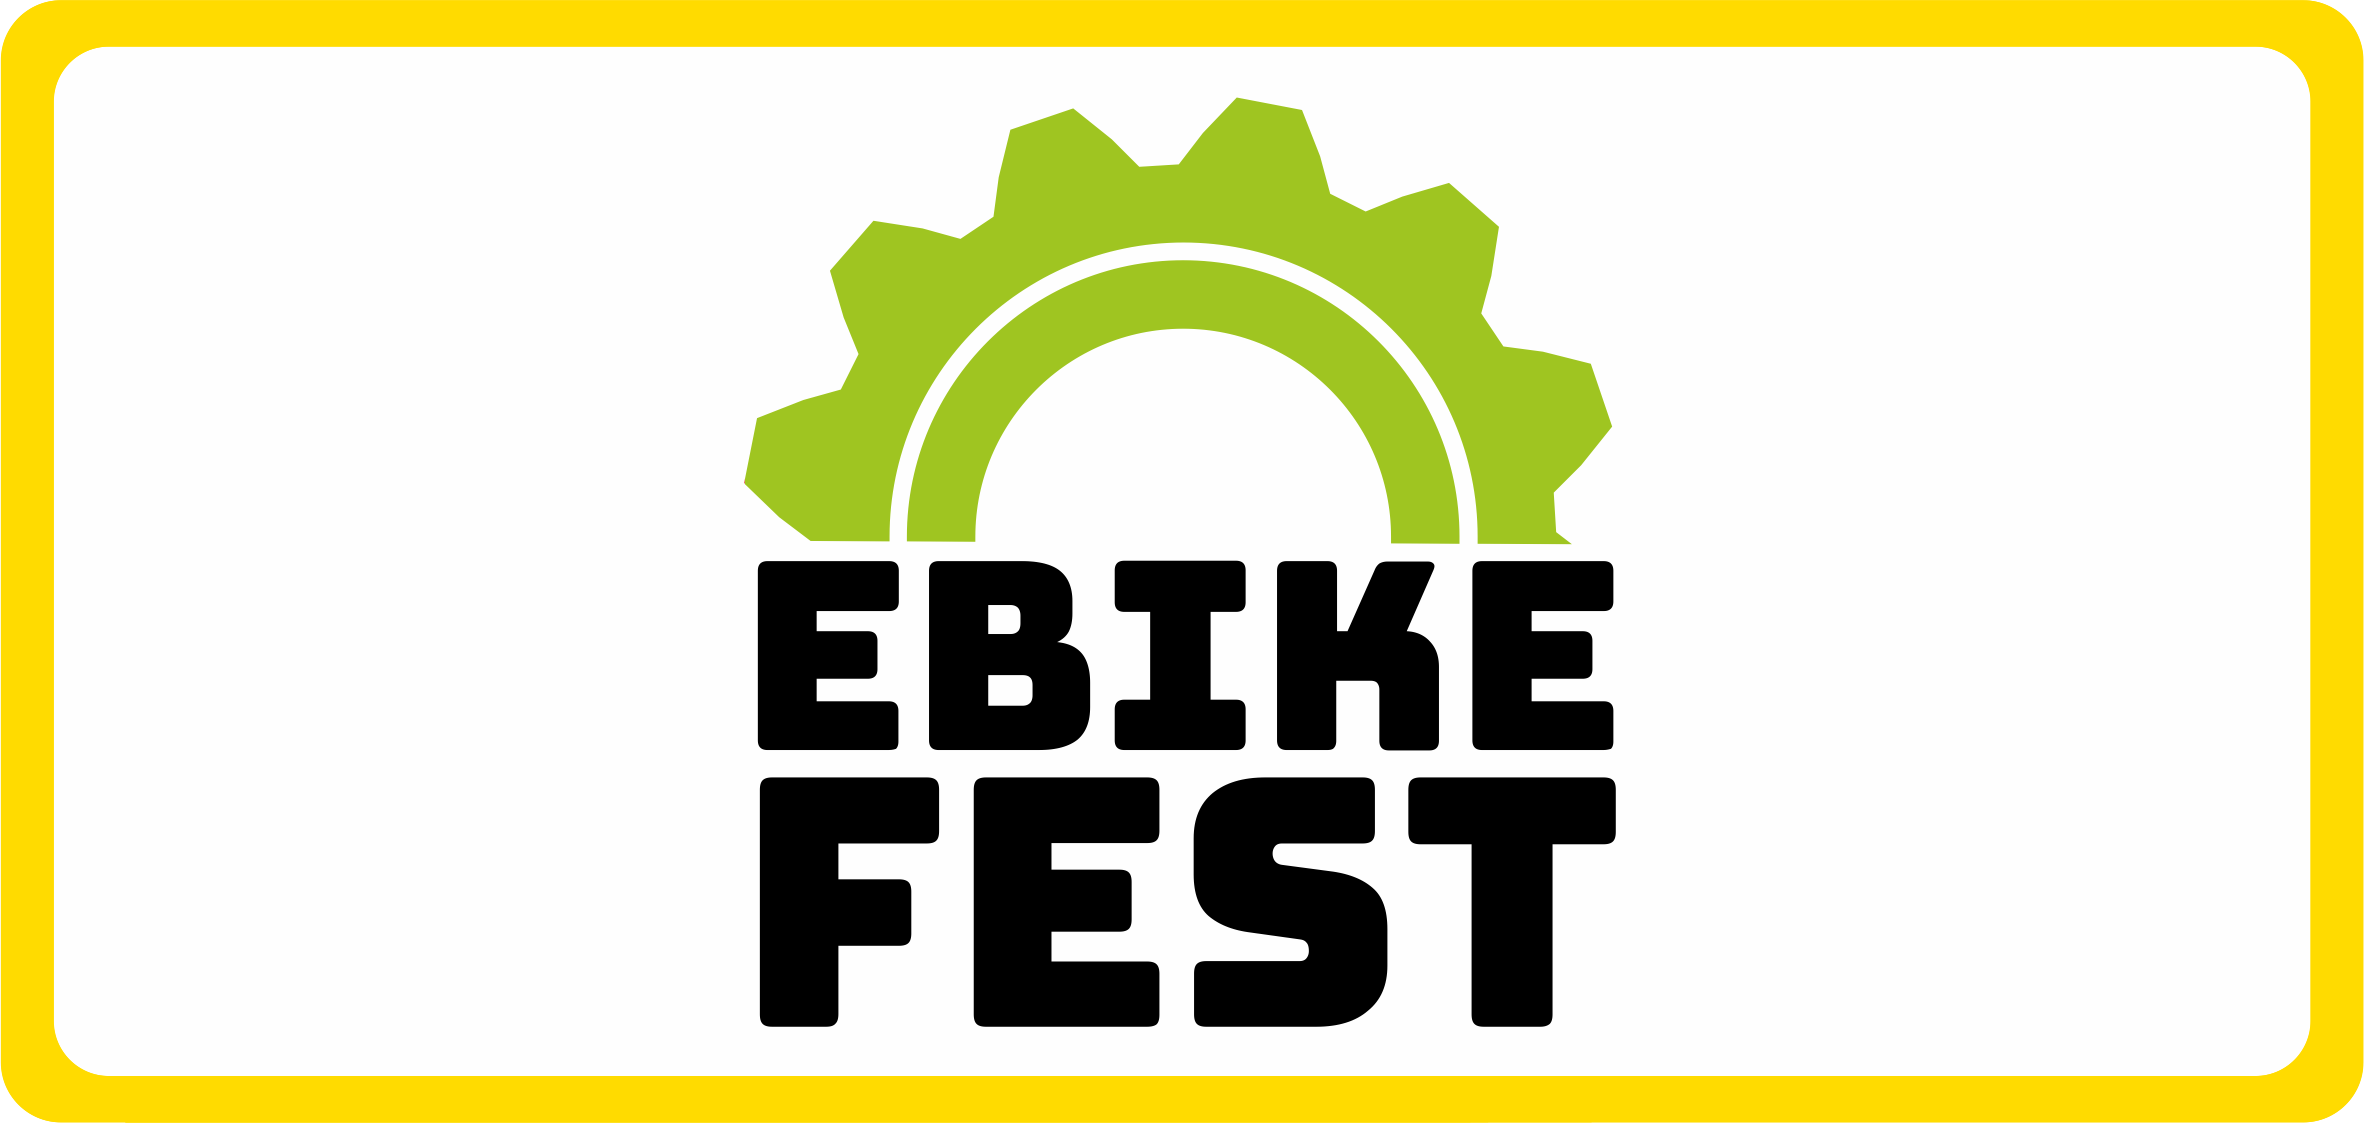 E-BIKE FEST 2020 - Praha - 13.-14.6.